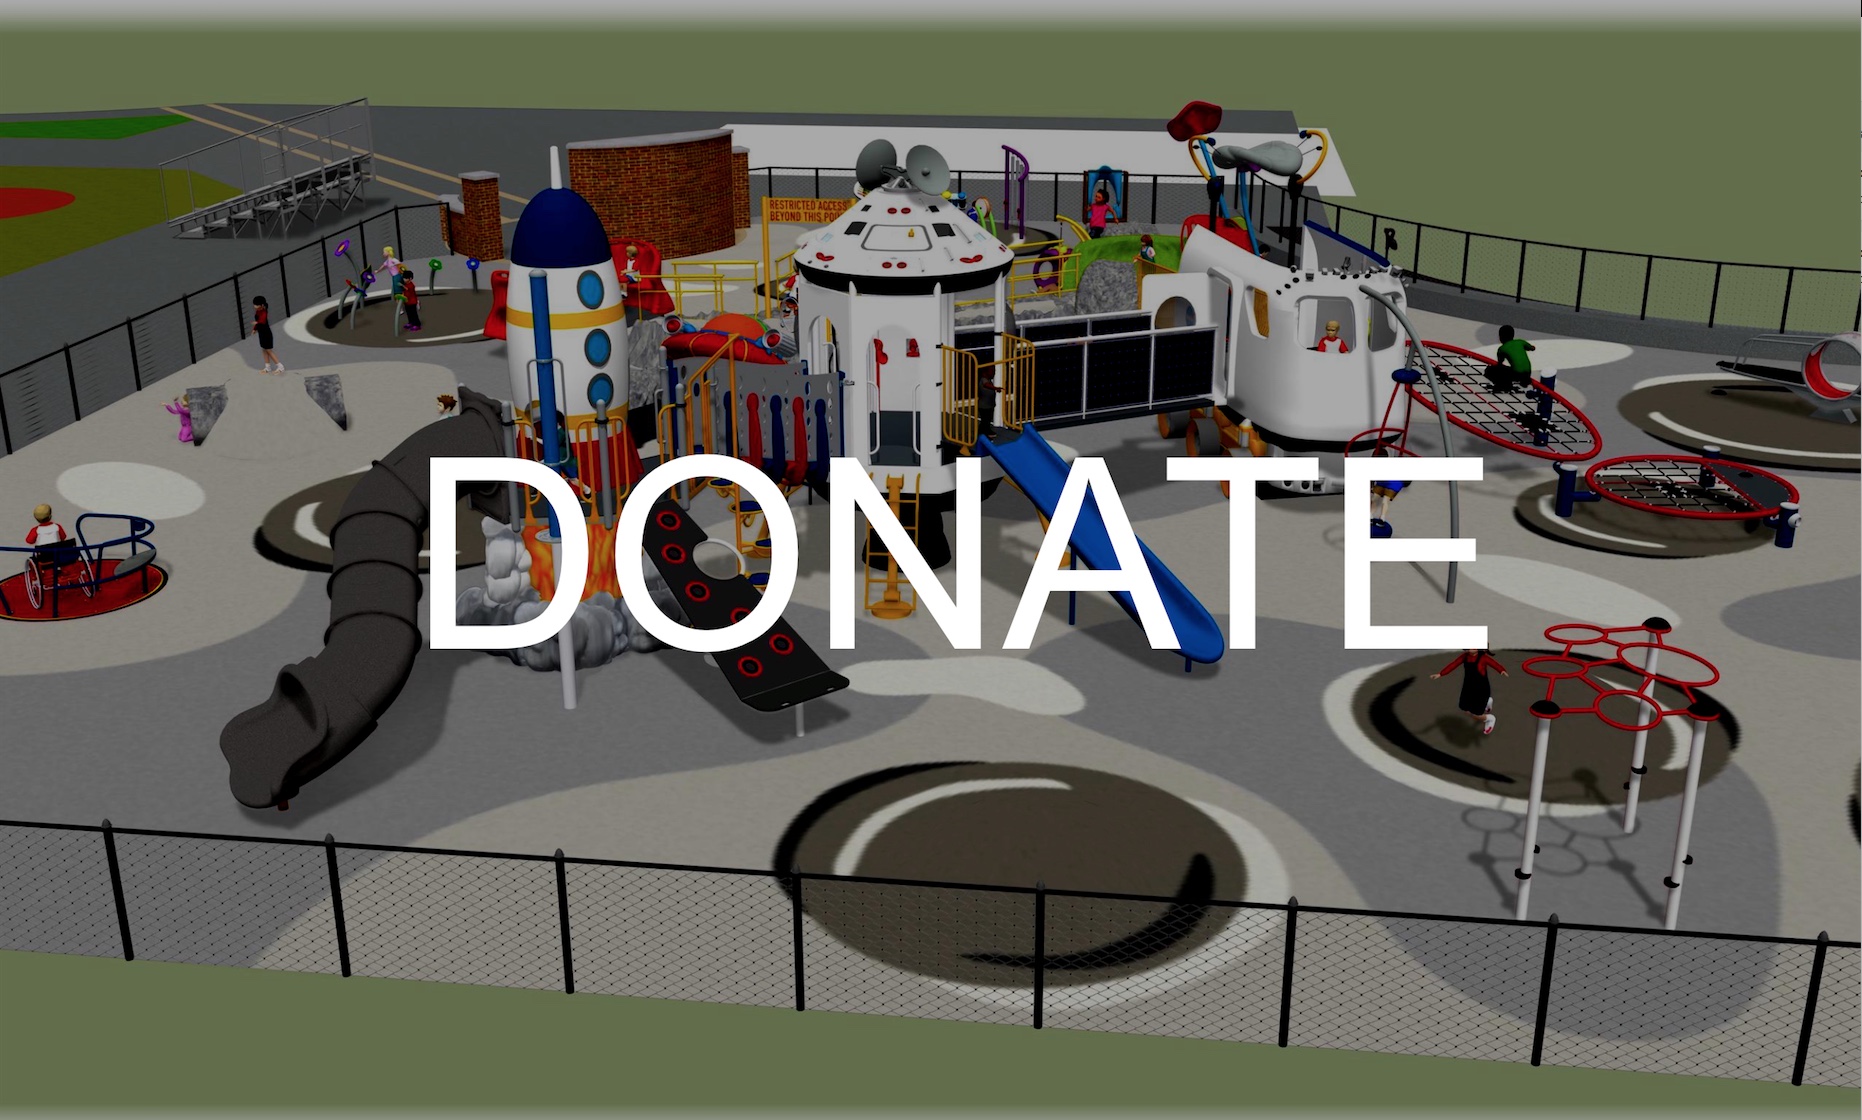 Donate2